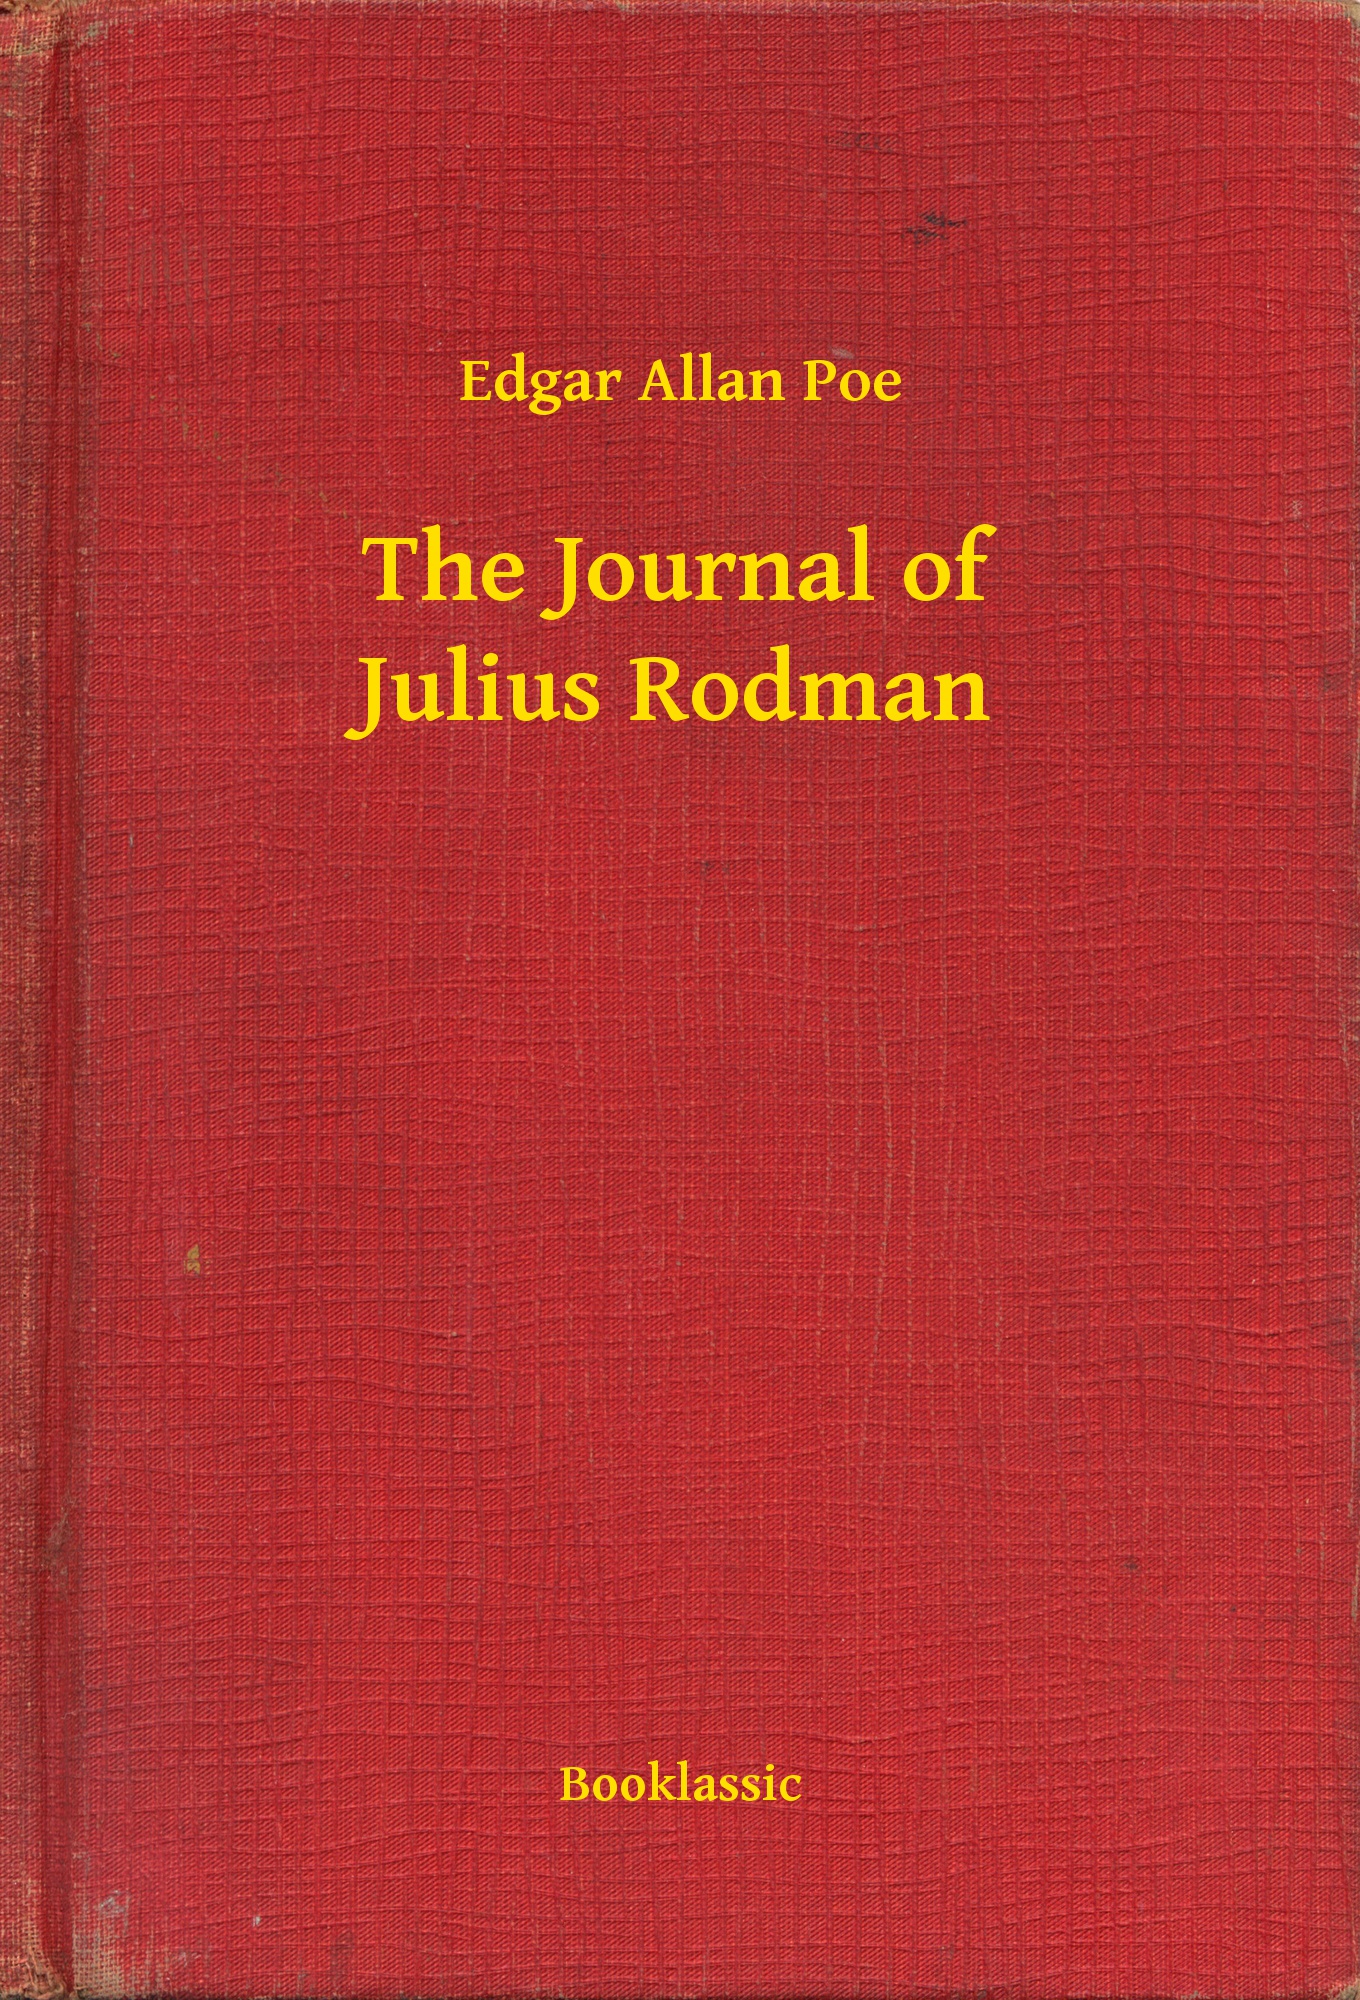 The Journal of Julius Rodman